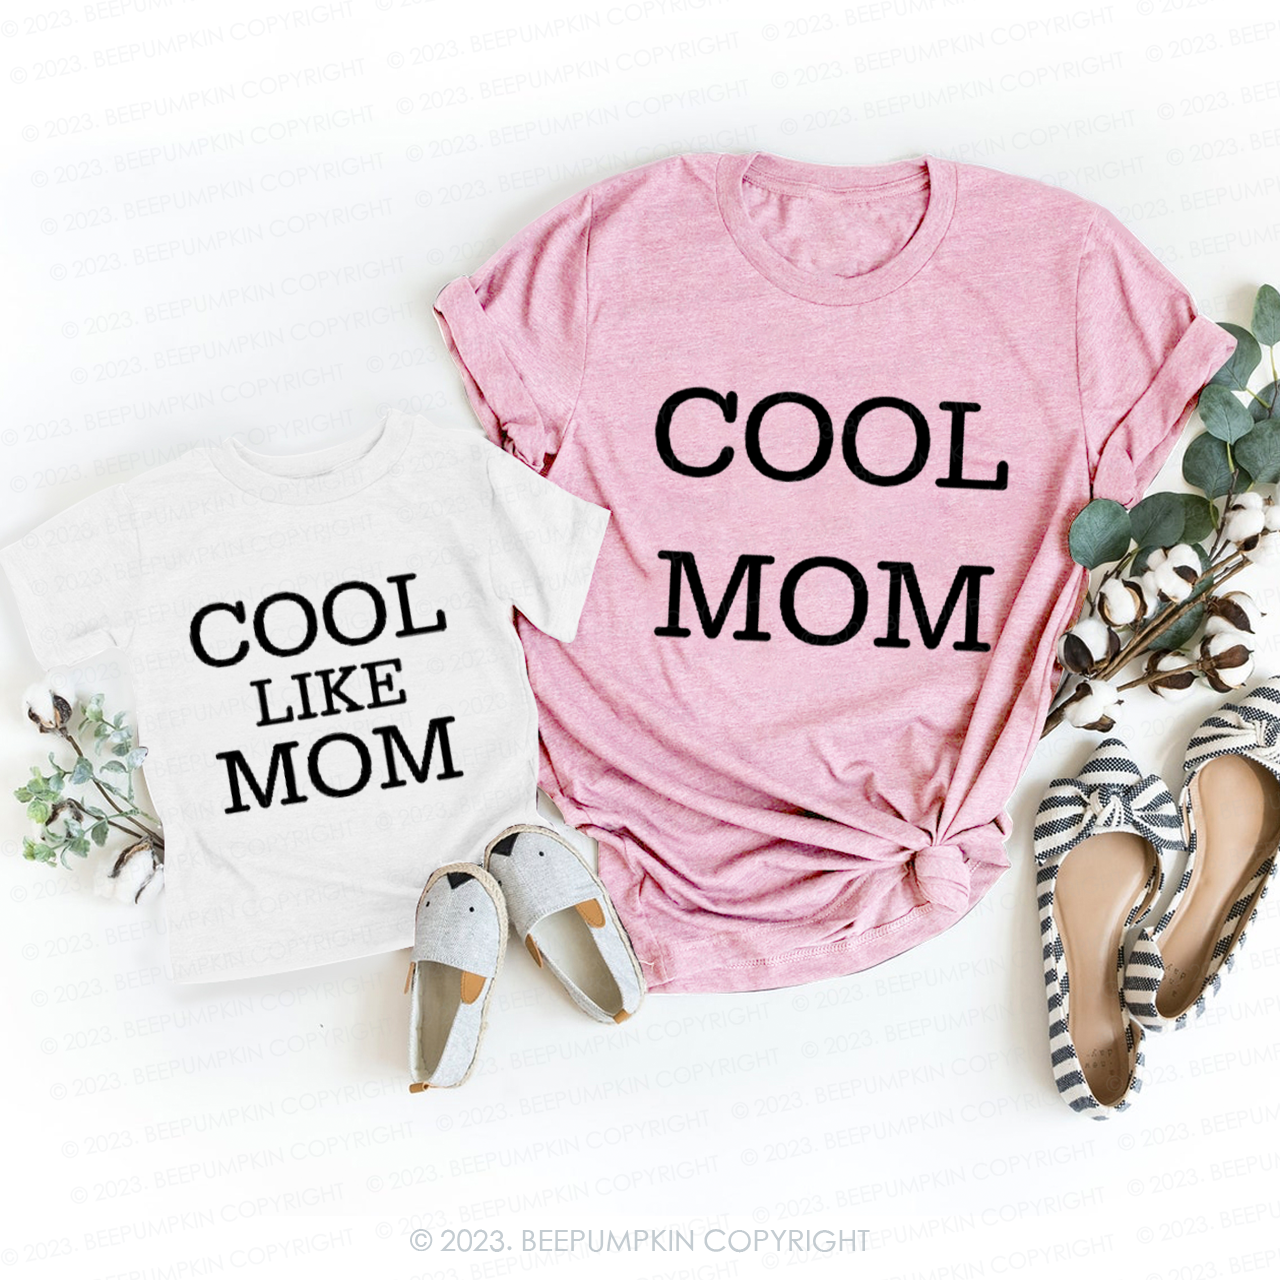 Cool Like Mom T-Shirts For Mom&Me